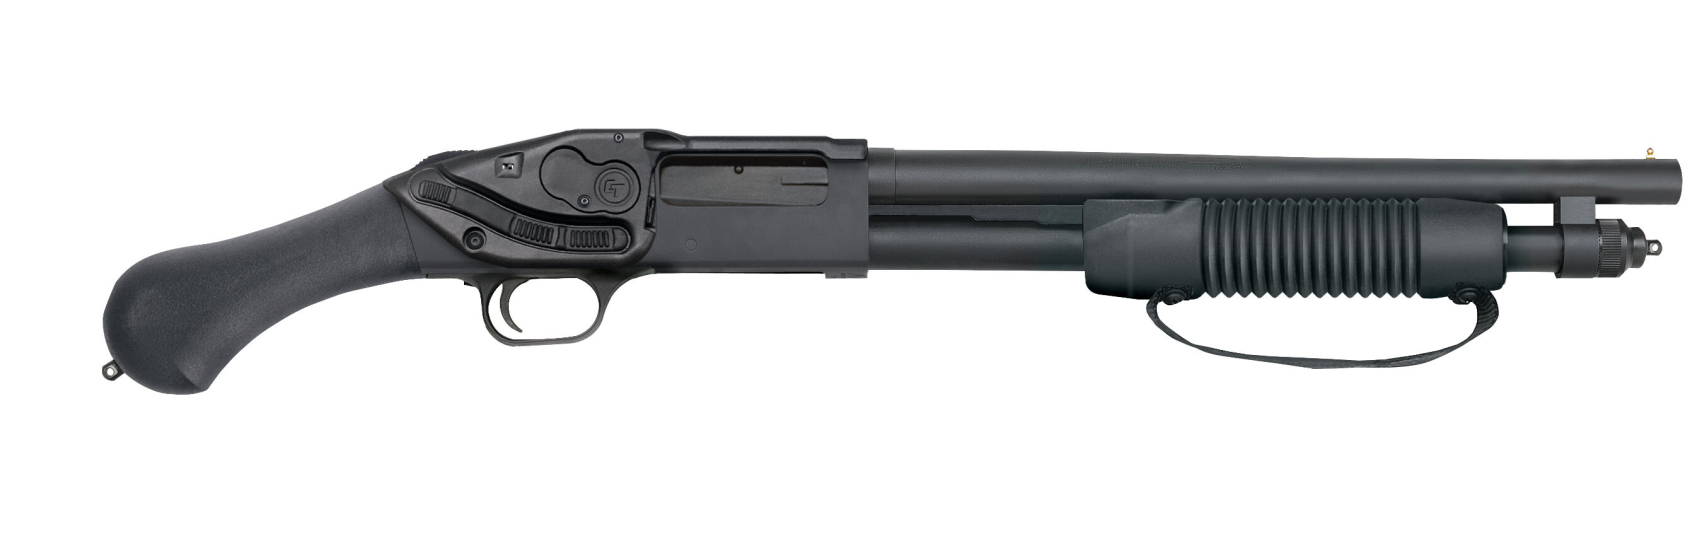 Main Firearm Image